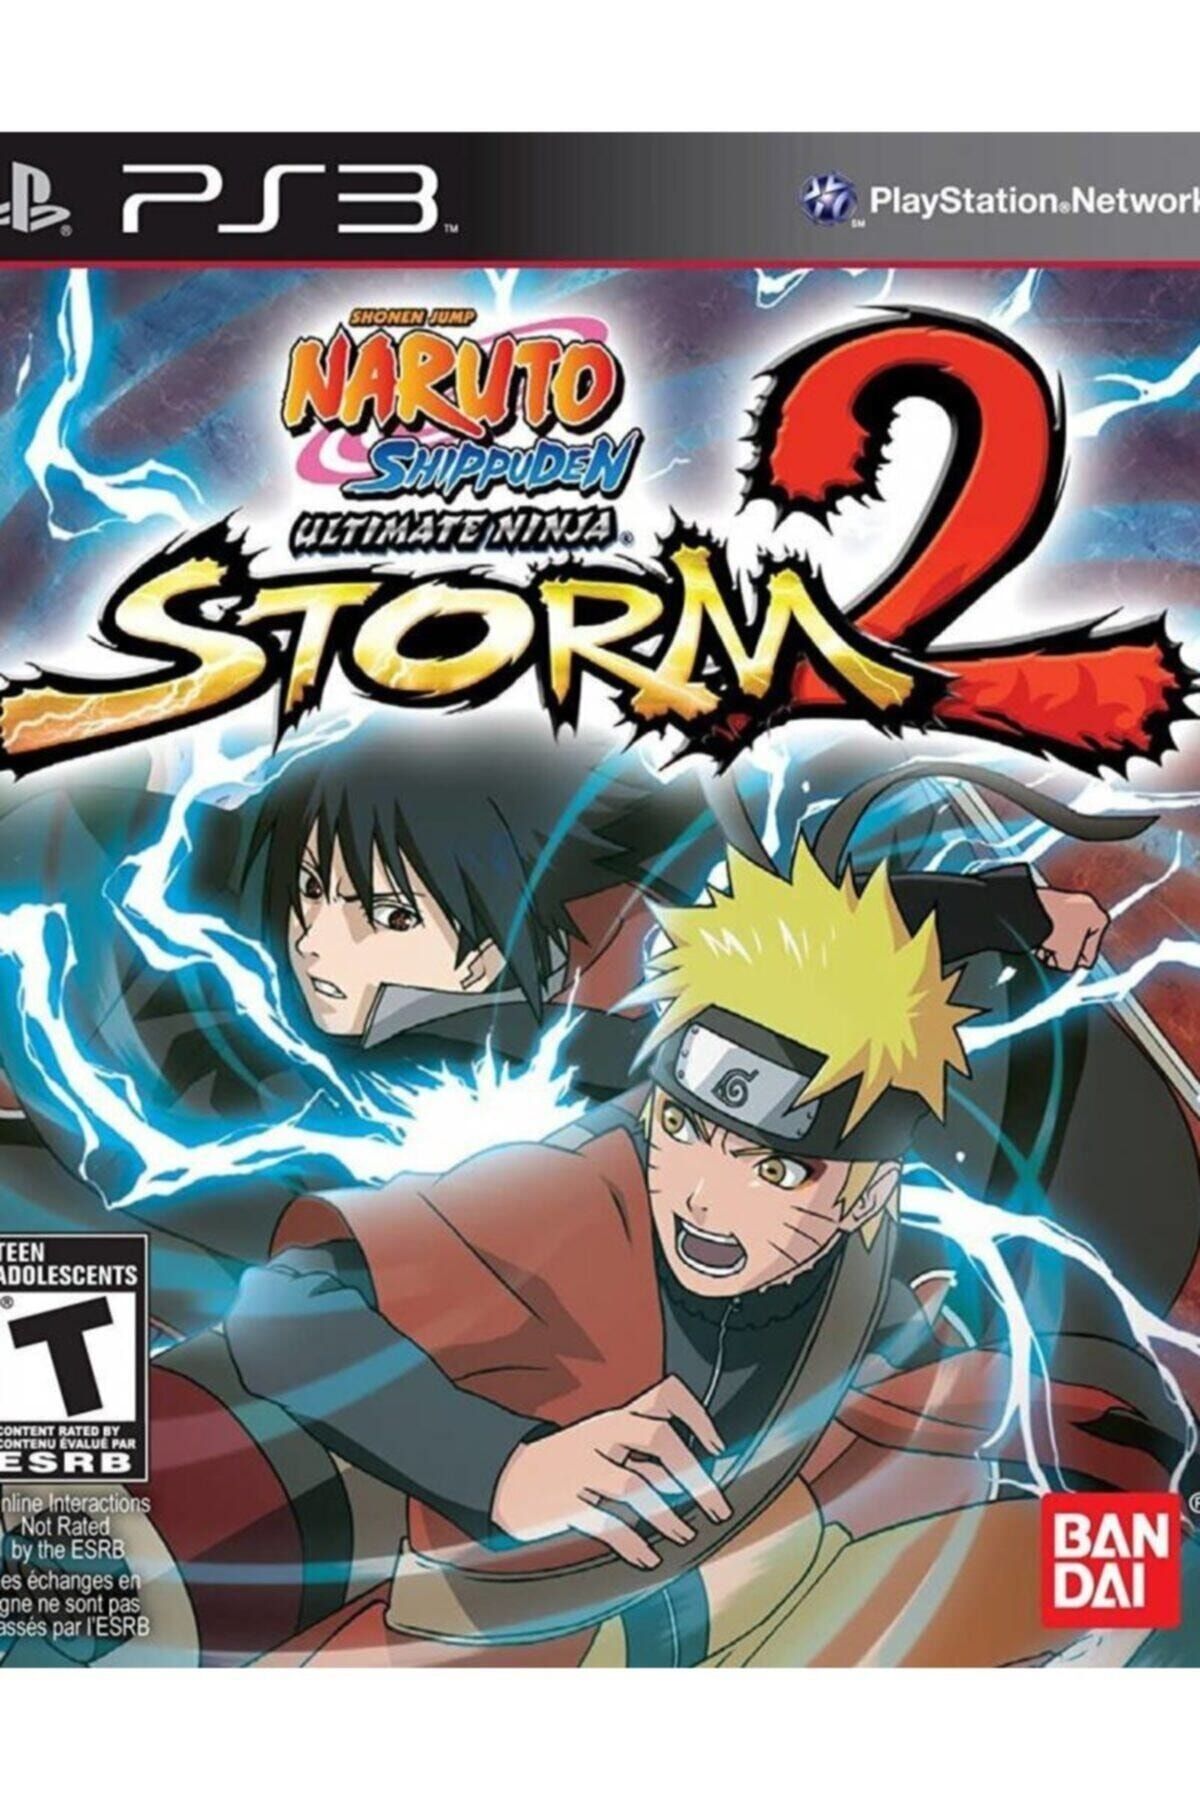 BANDAI Naruto Shippuden: Ultimate Ninja Storm 2 Ps3 Oyun